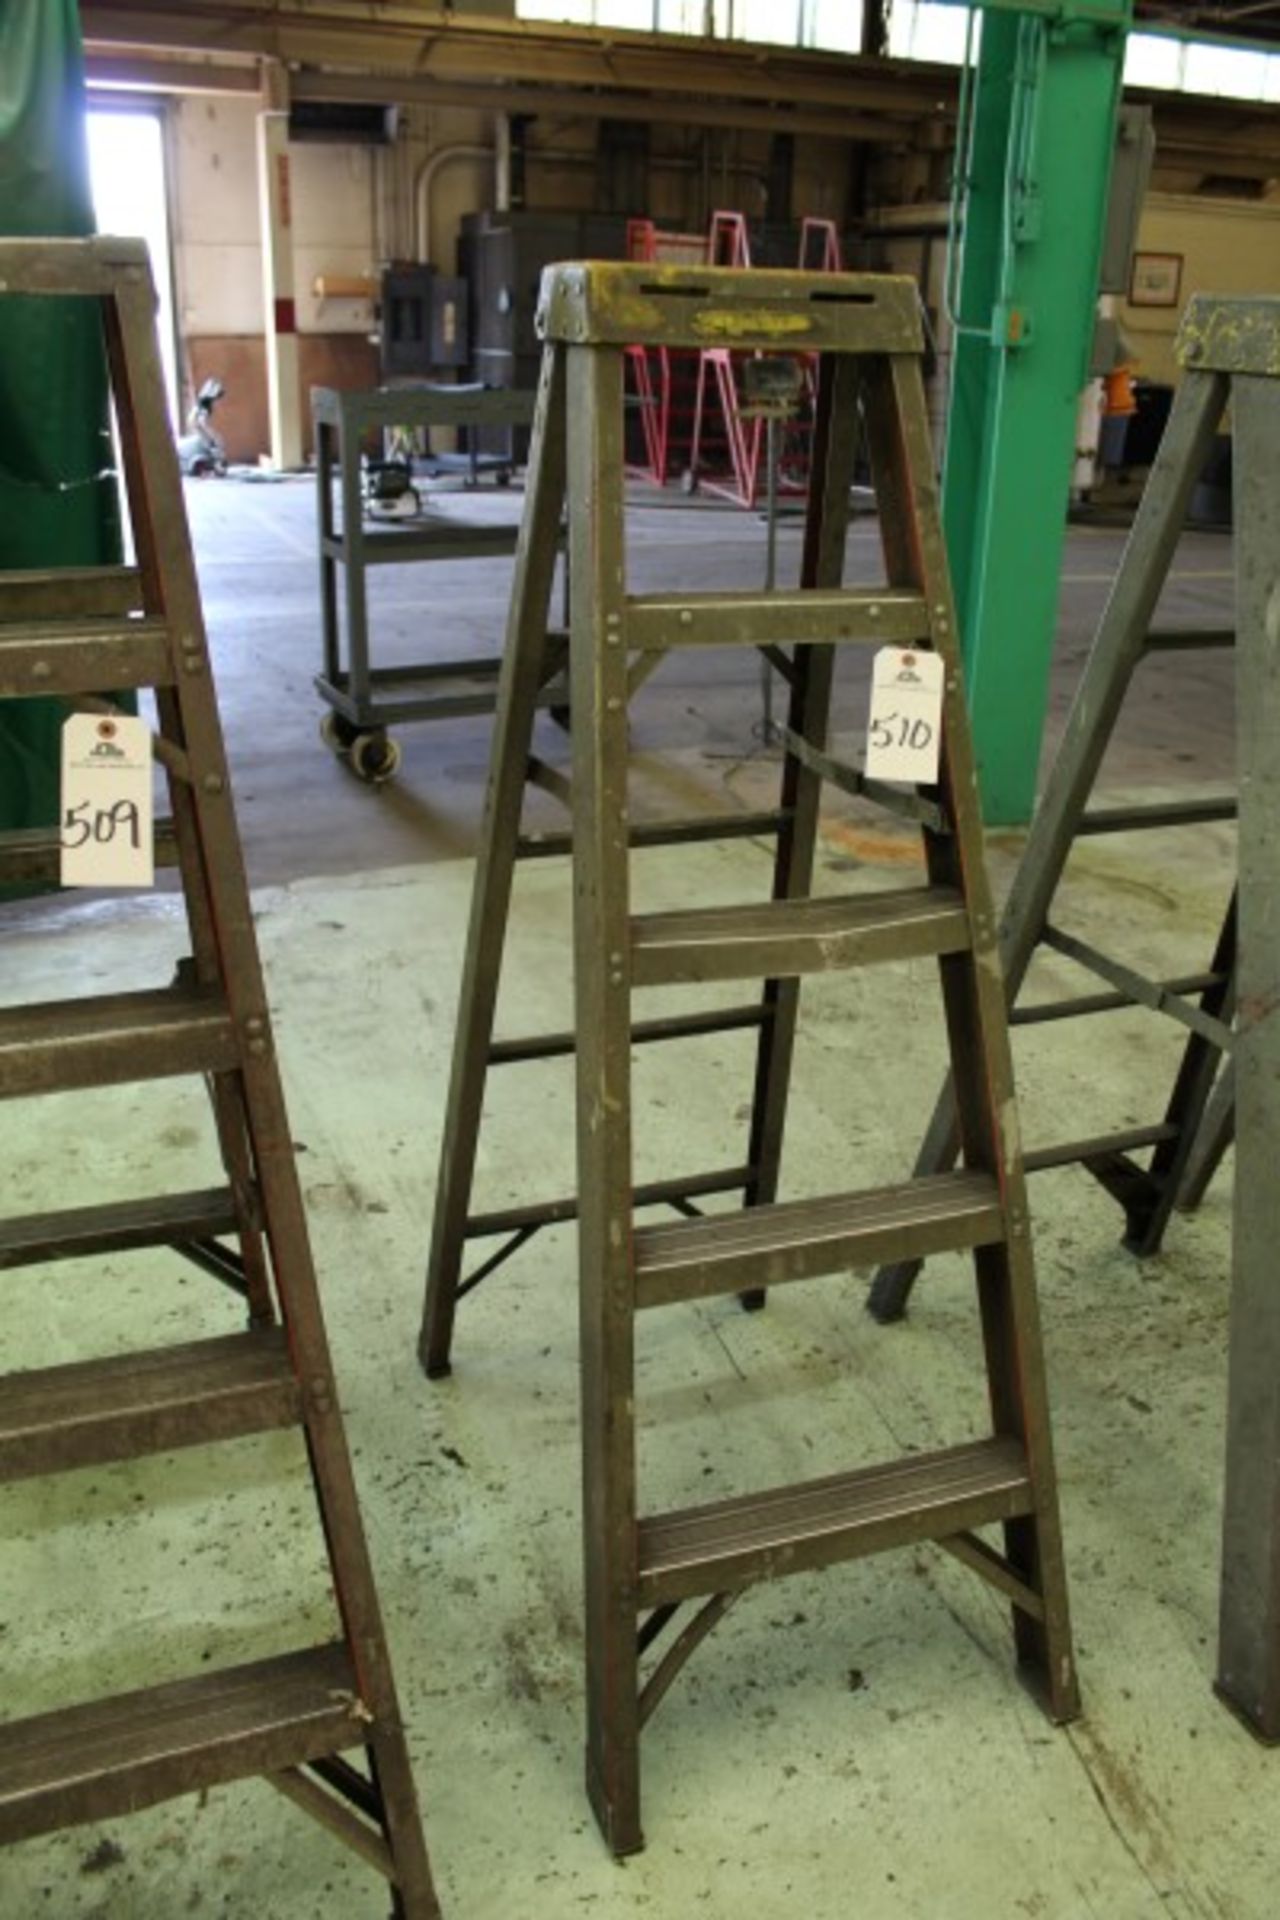 5' Fiberglass Step Ladder